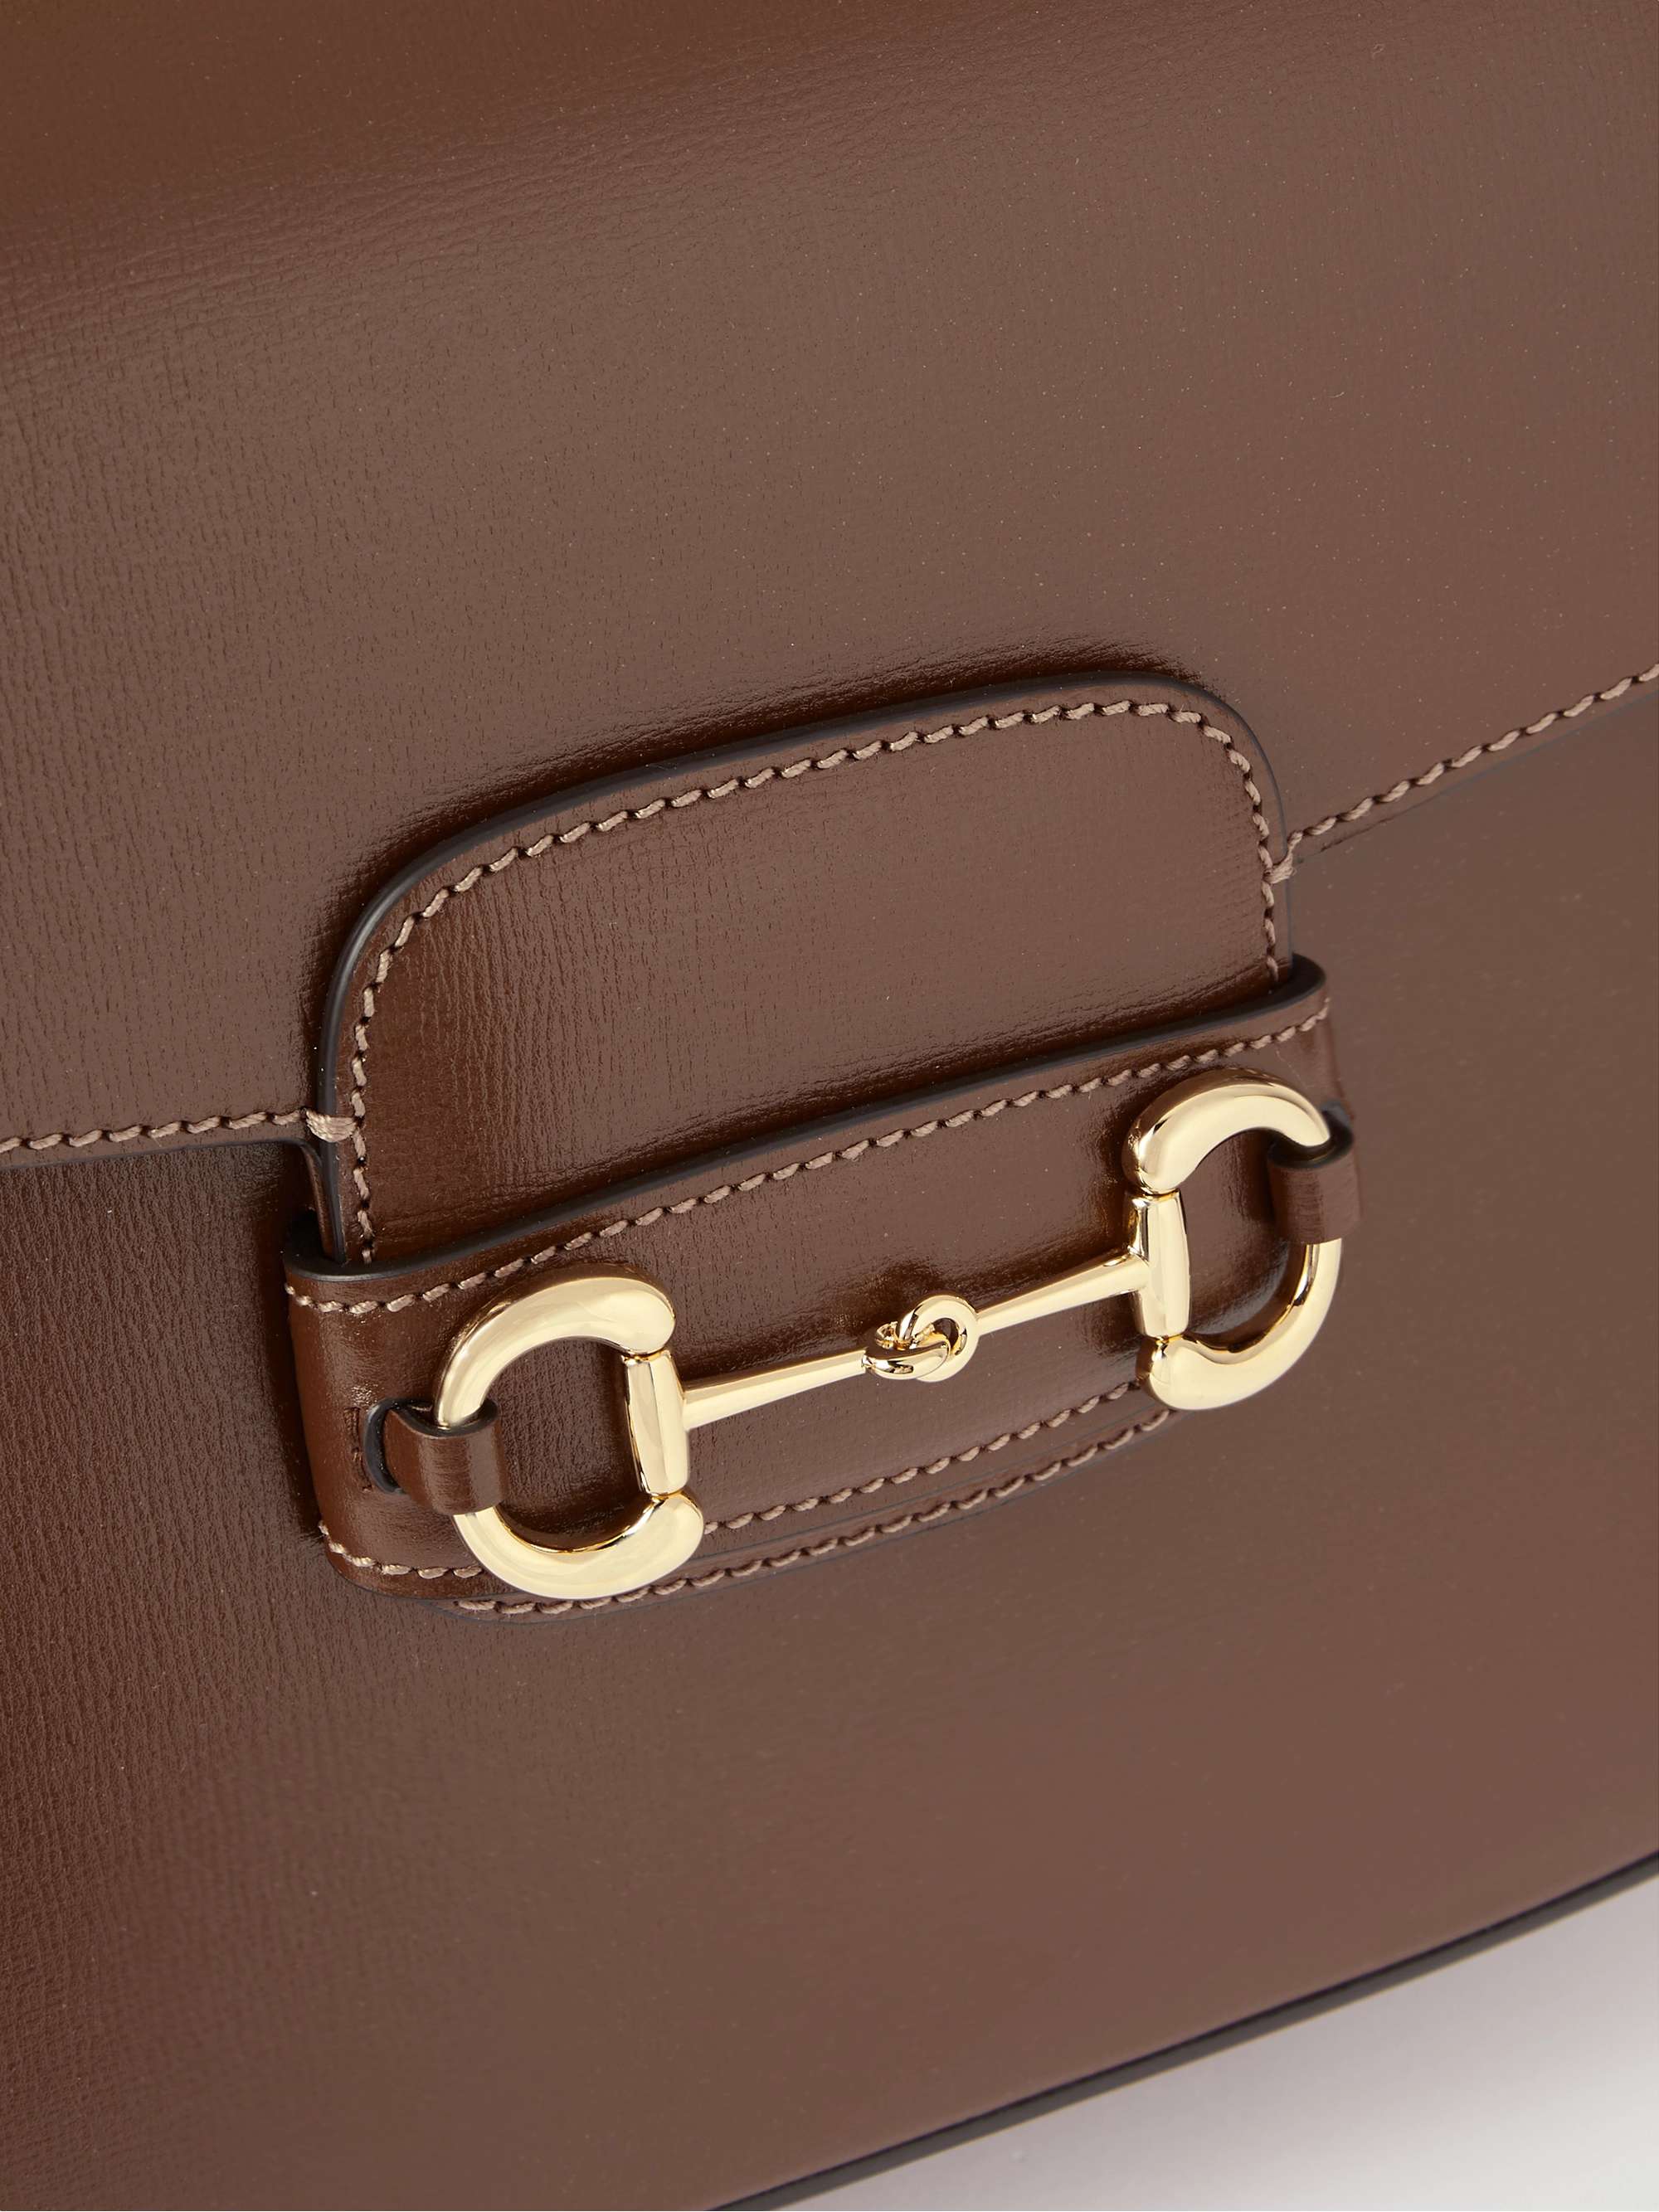 GUCCI Horsebit-Detailed Cross-Grain Leather Messenger Bag